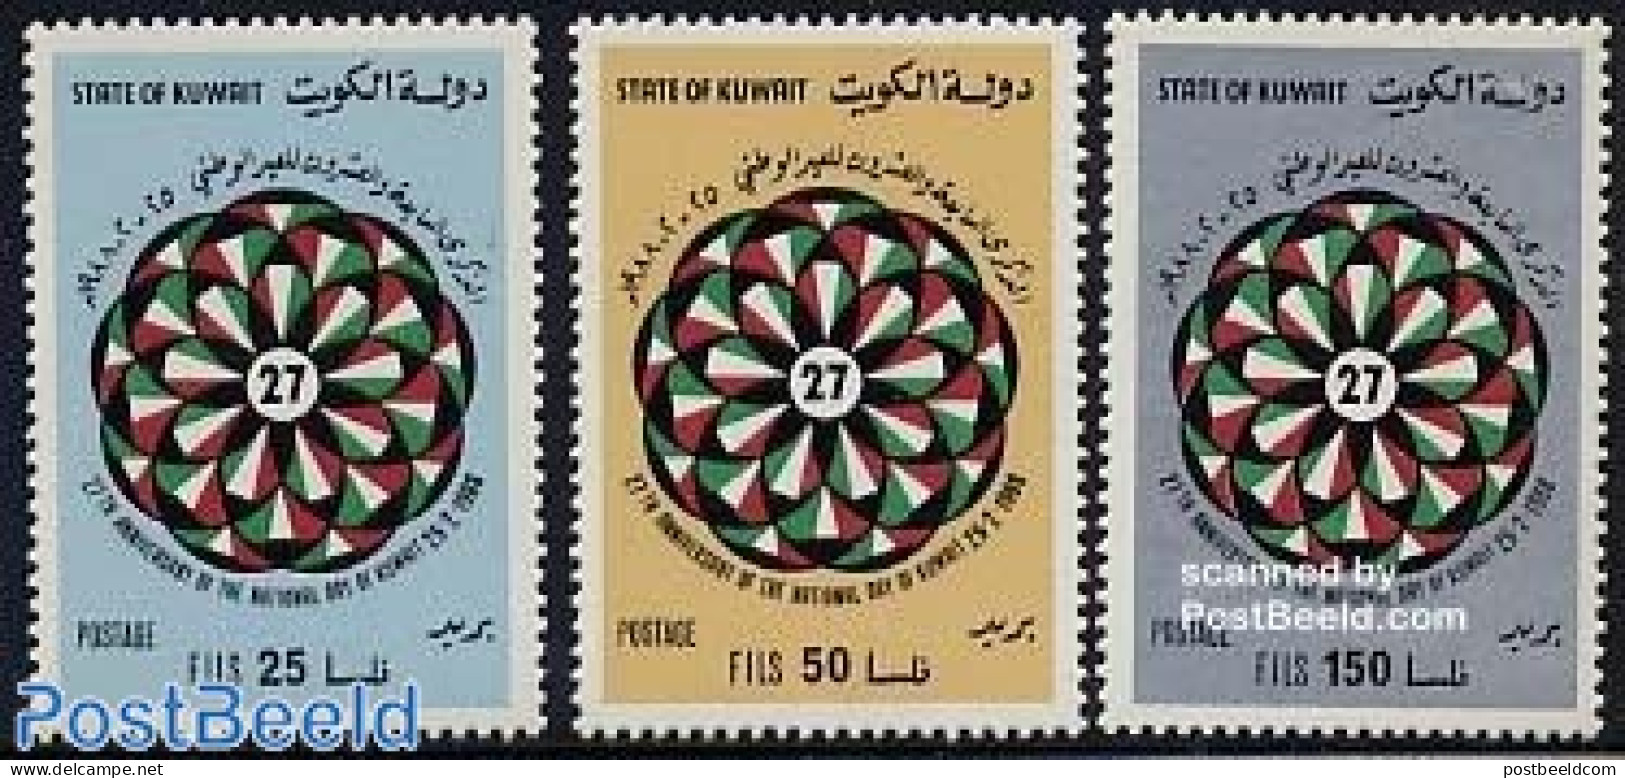 Kuwait 1988 National Day 3v, Mint NH - Koweït